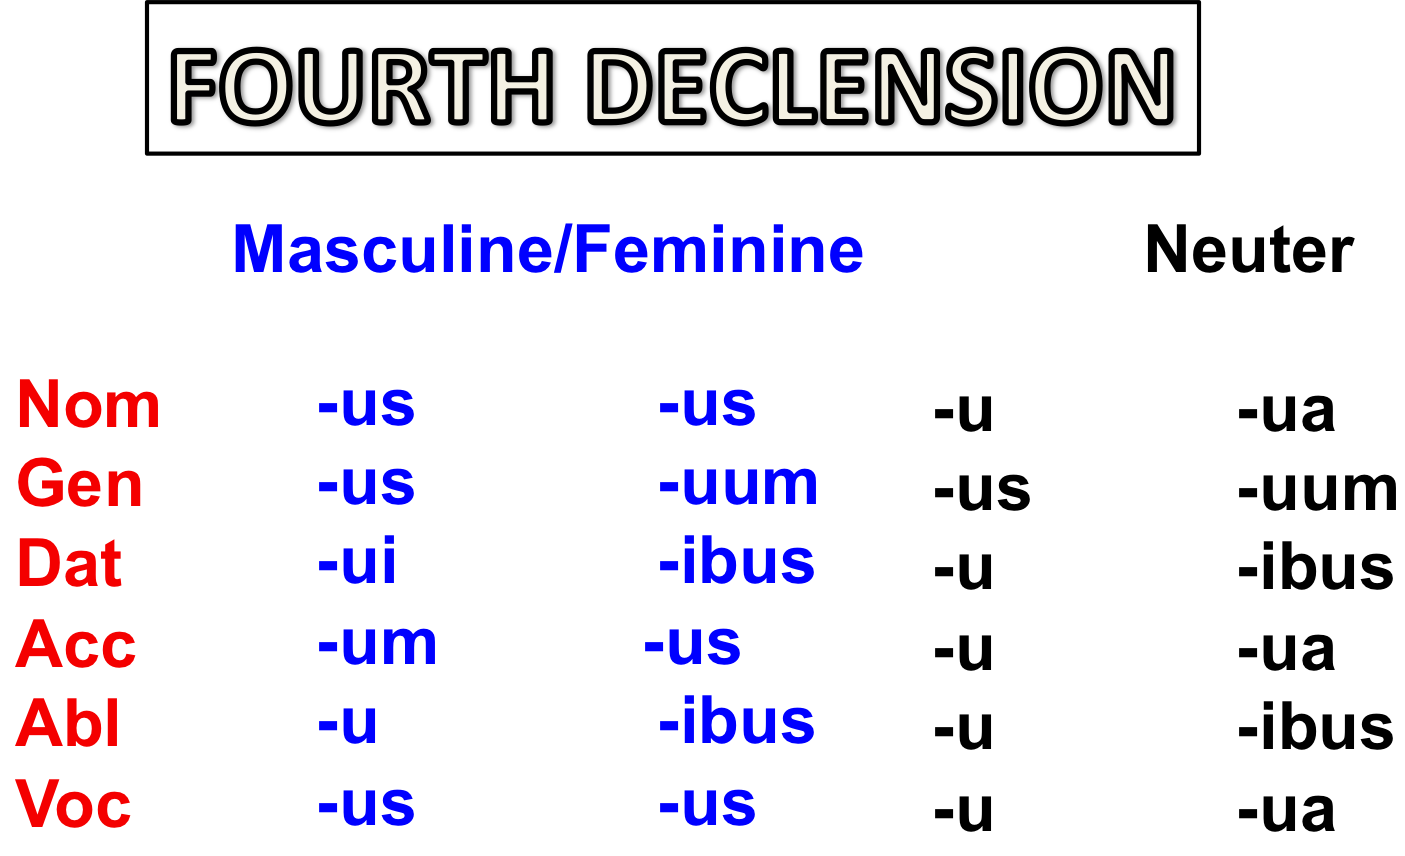 Fourth Declension Latin Nouns 21